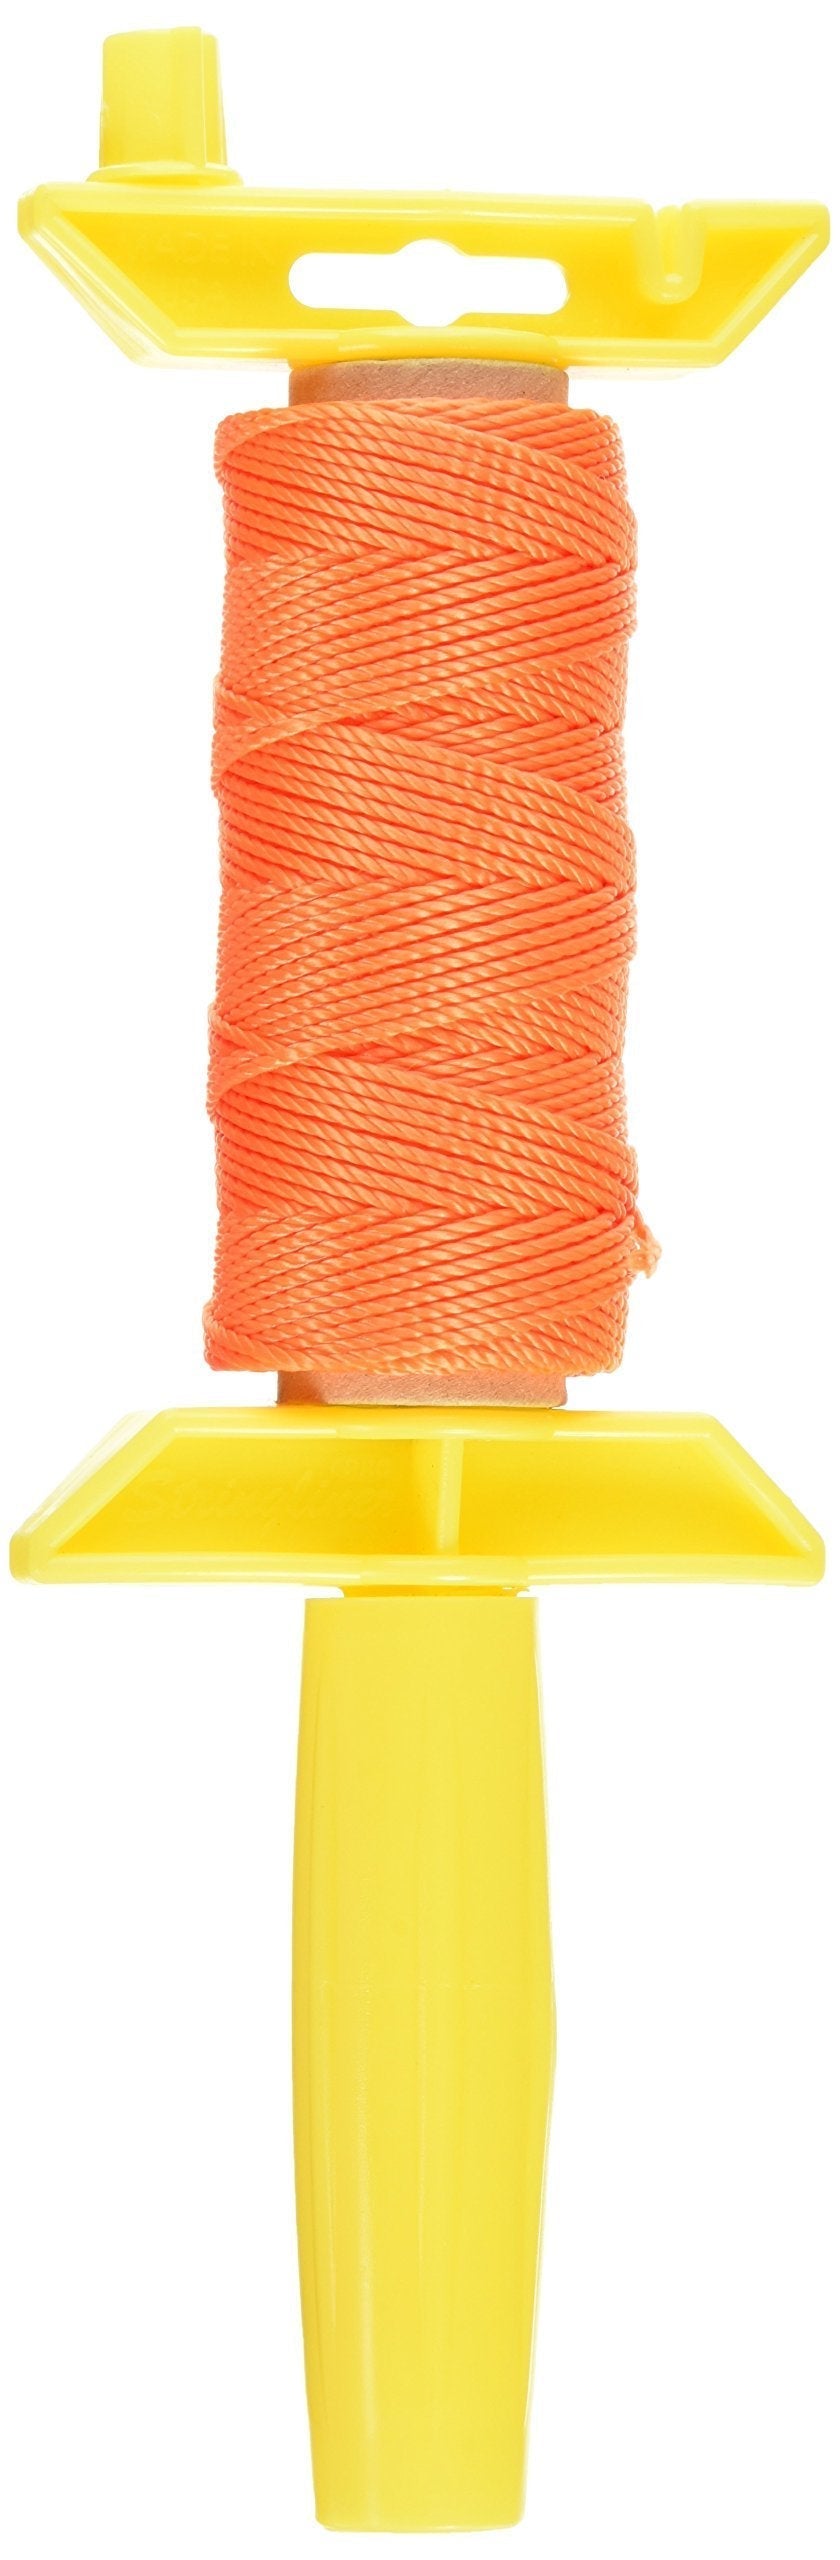 STRINGLINER Company 25006 Twisted 135-Feet Reloadable Line Reel, Fluorescent Orange 1 Pack of 1 - LeoForward Australia